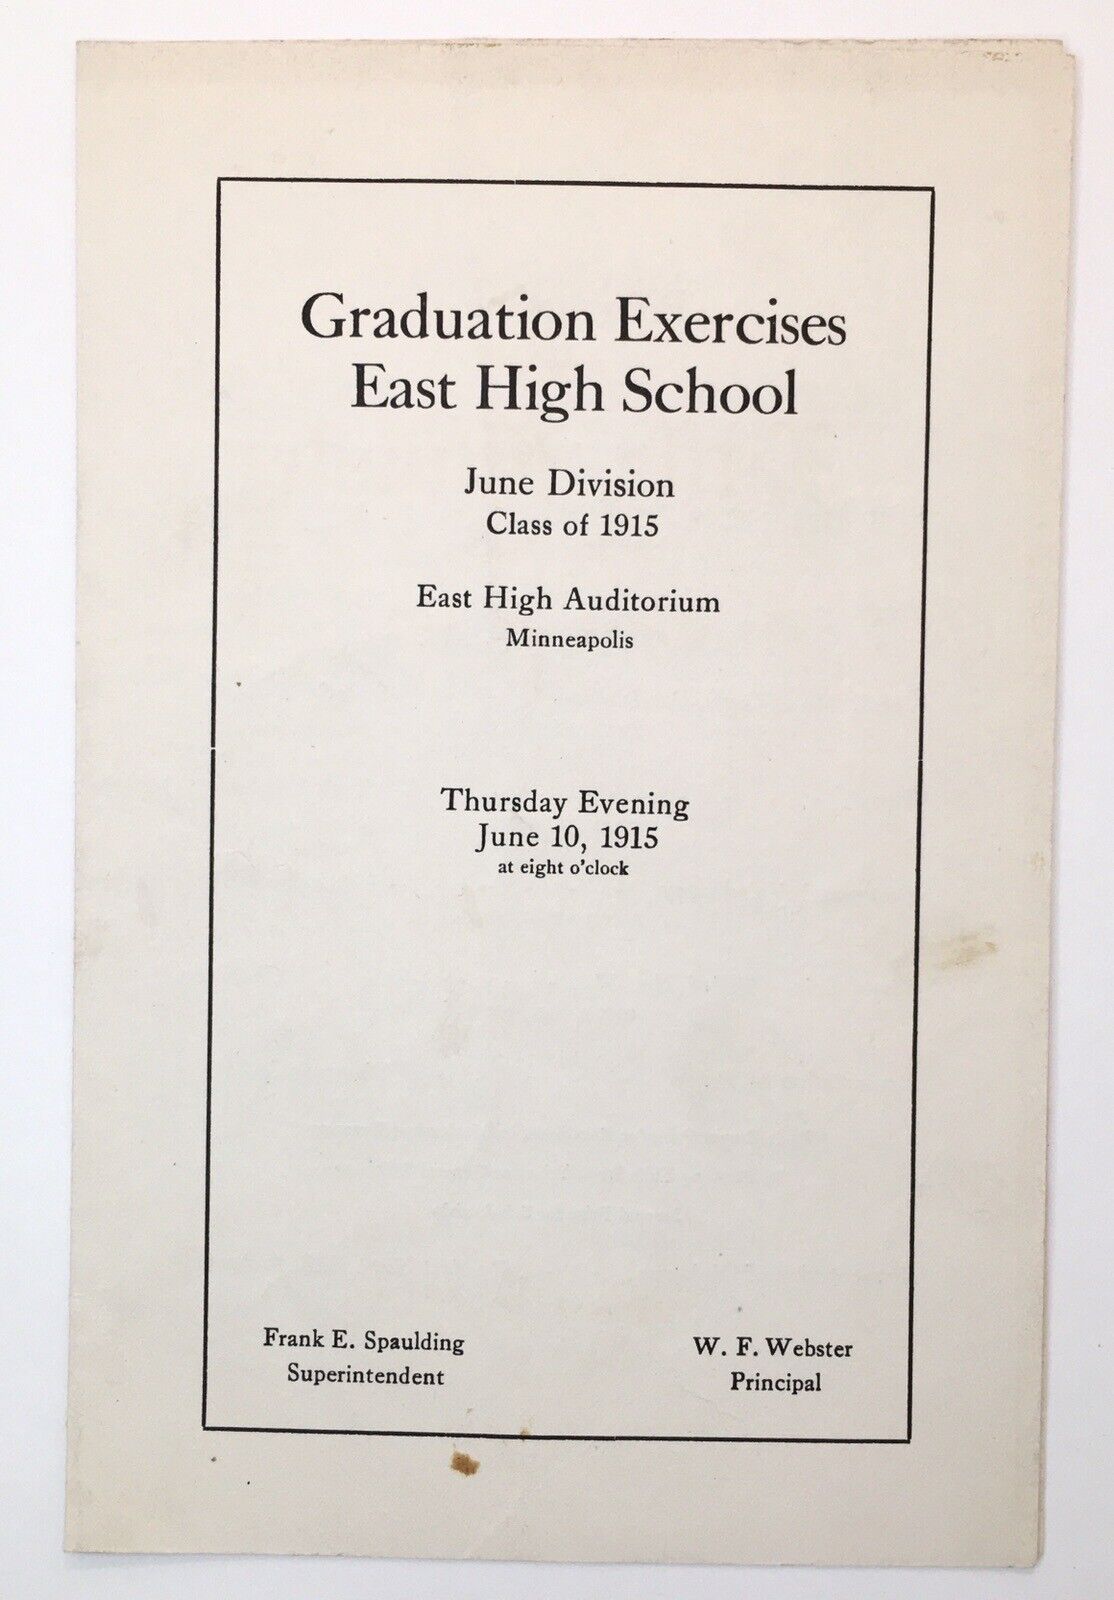 June 1915 Graduation Exercises Program East High School Minneapolis MN